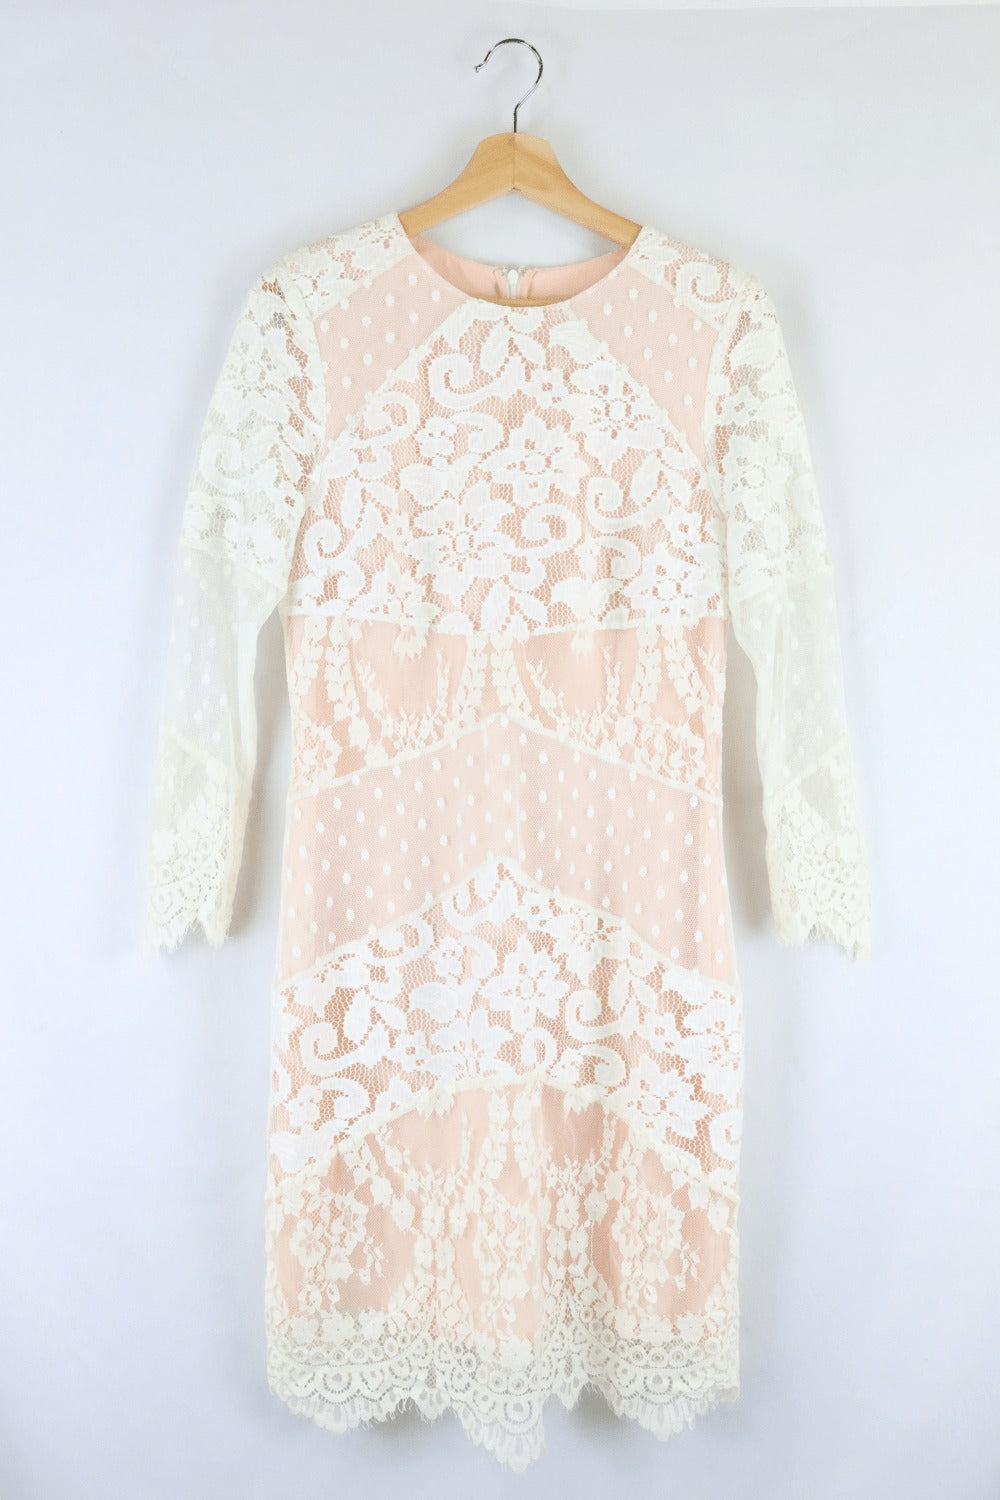 Alannah Hill White Lace Dress 12